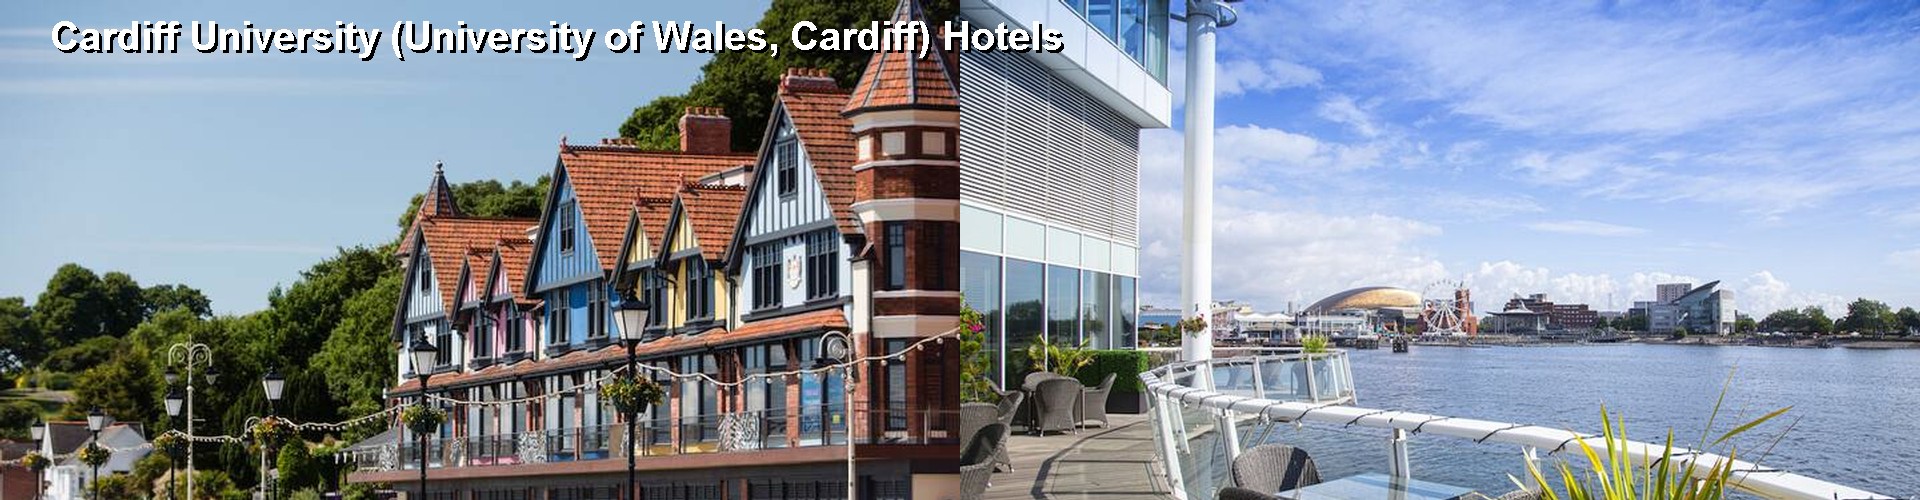 3 Best Hotels near Cardiff University (University of Wales, Cardiff)